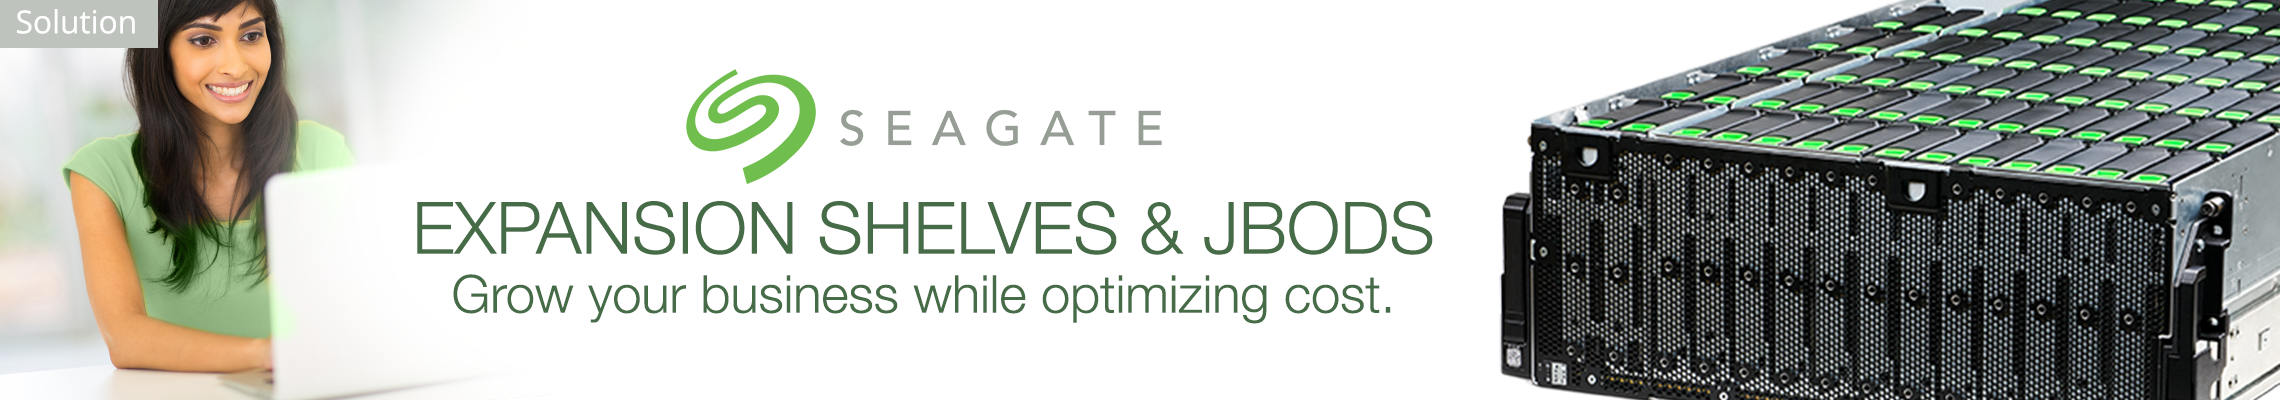 Seagate Expansion Shelves & JBODs banner